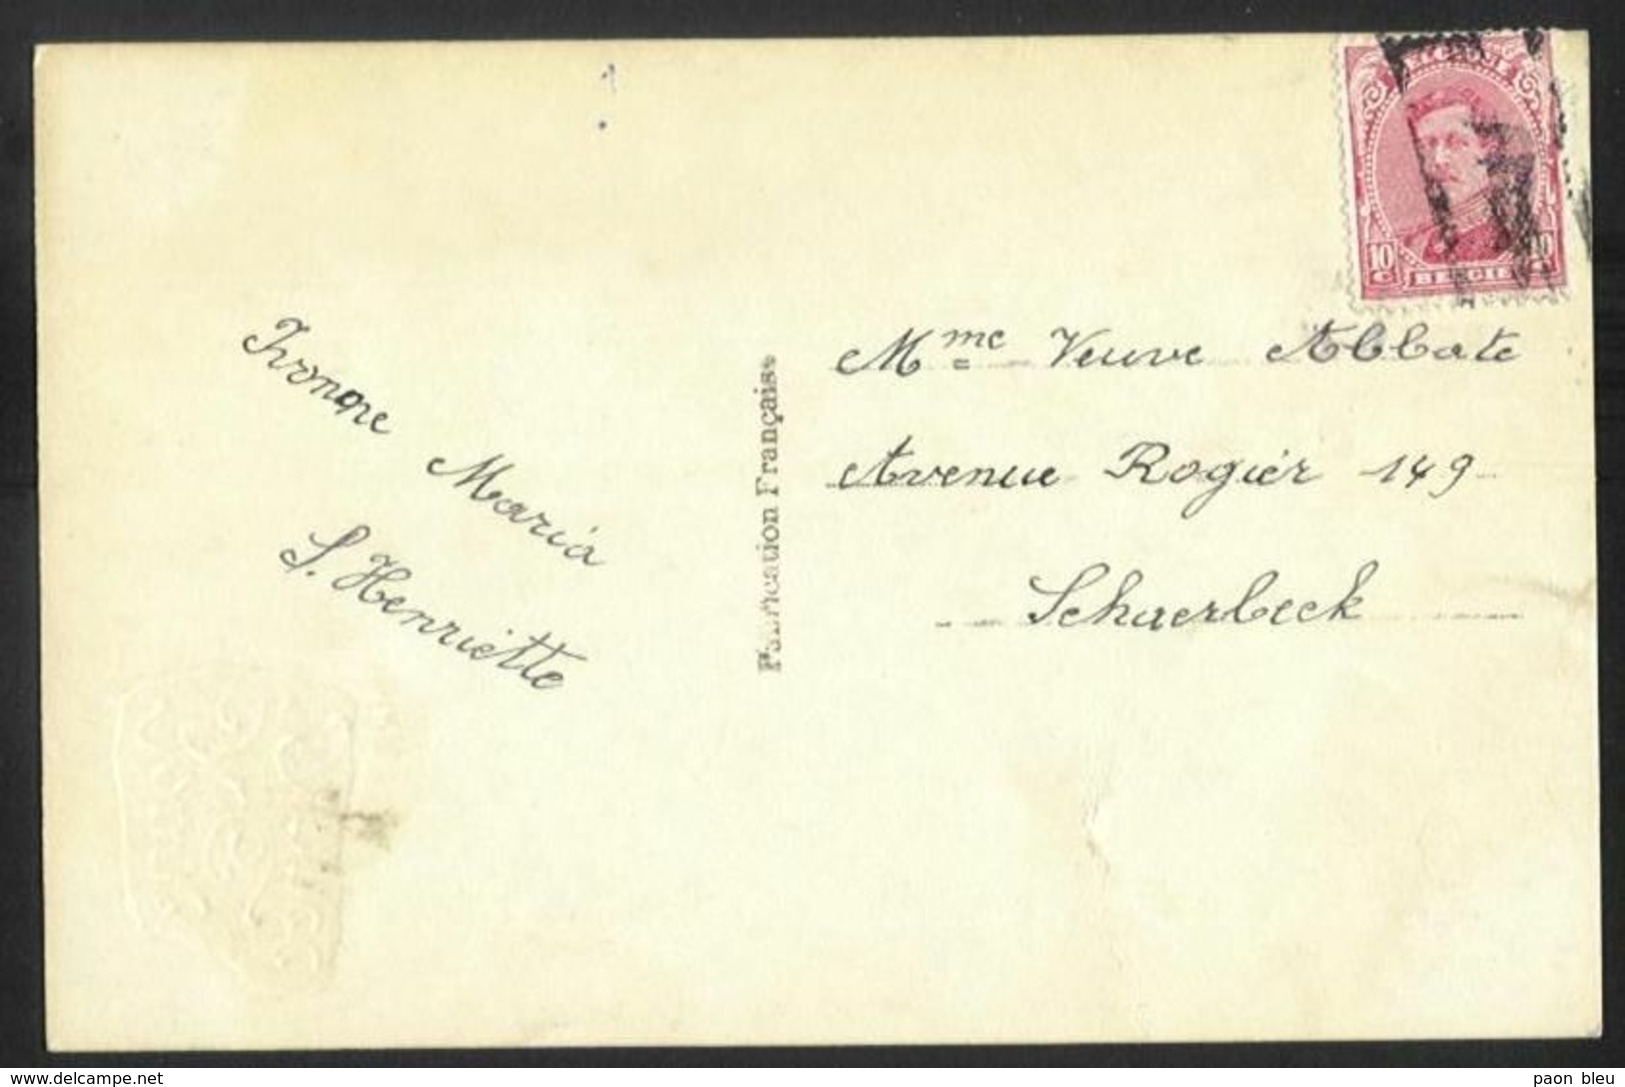 Belgique - Obl.fortune 1919 - Obl. Cachet Maculant Sans Indication - Fortune Cancels (1919)